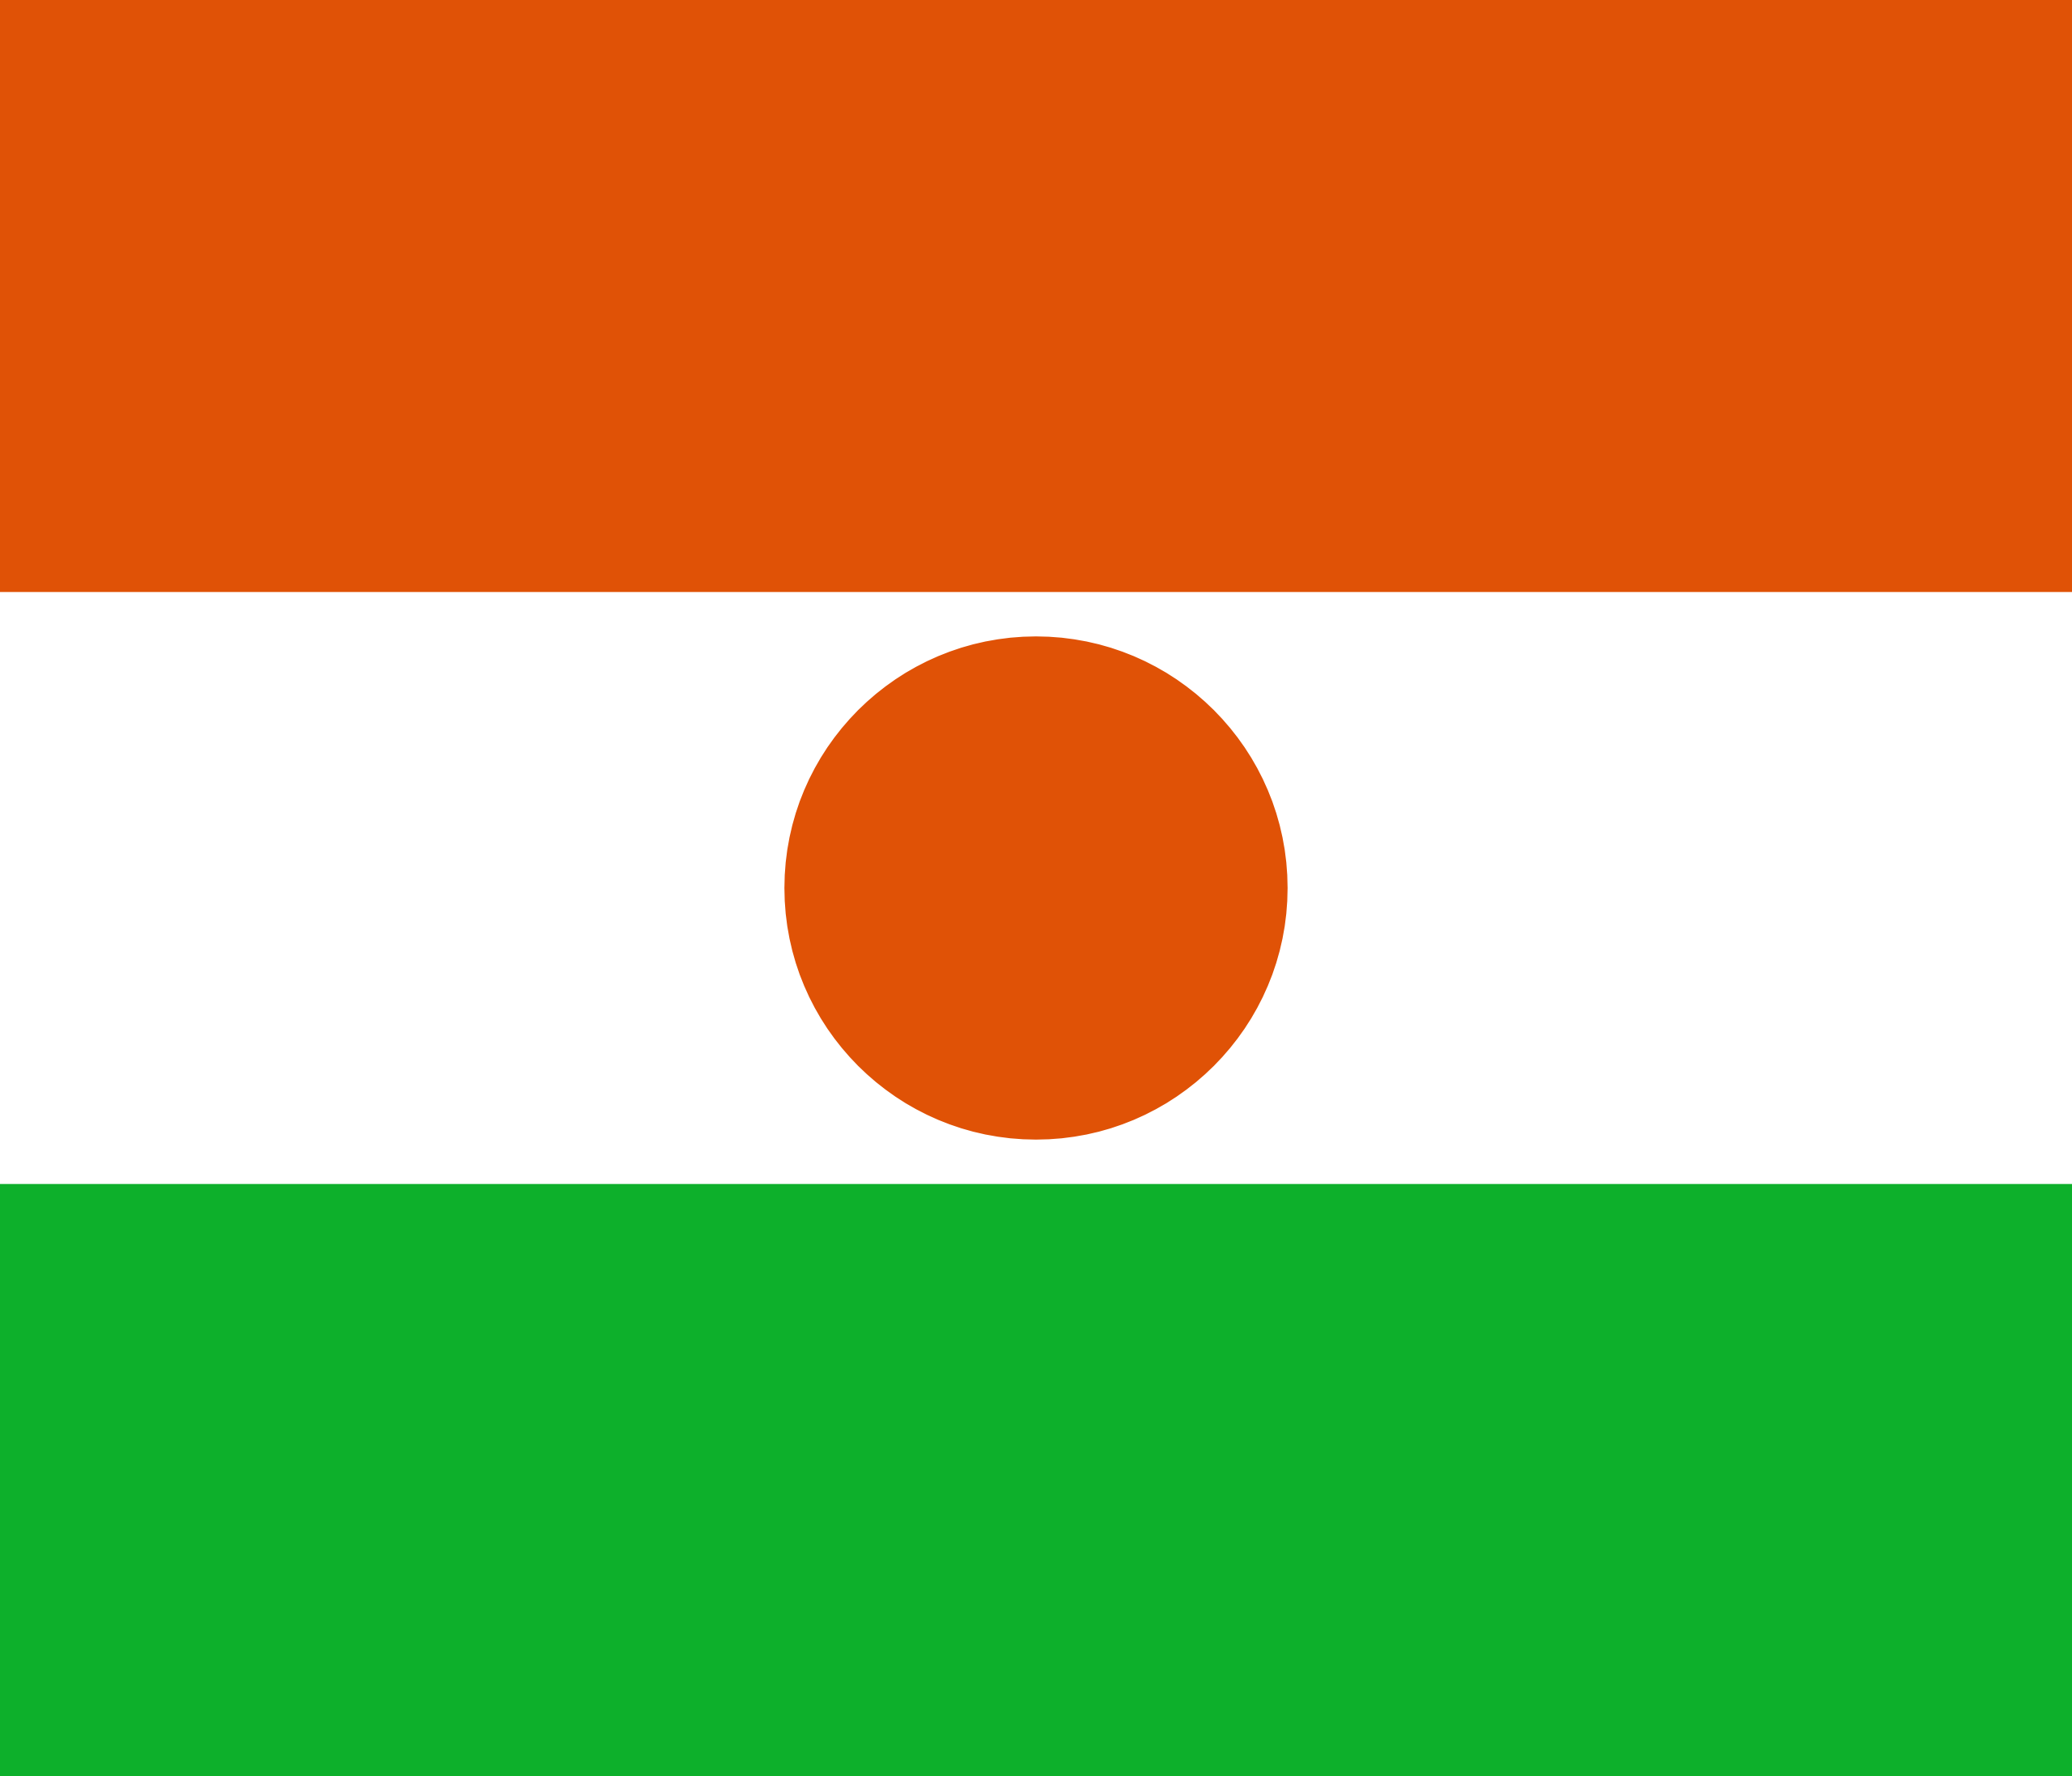 Niger's flag